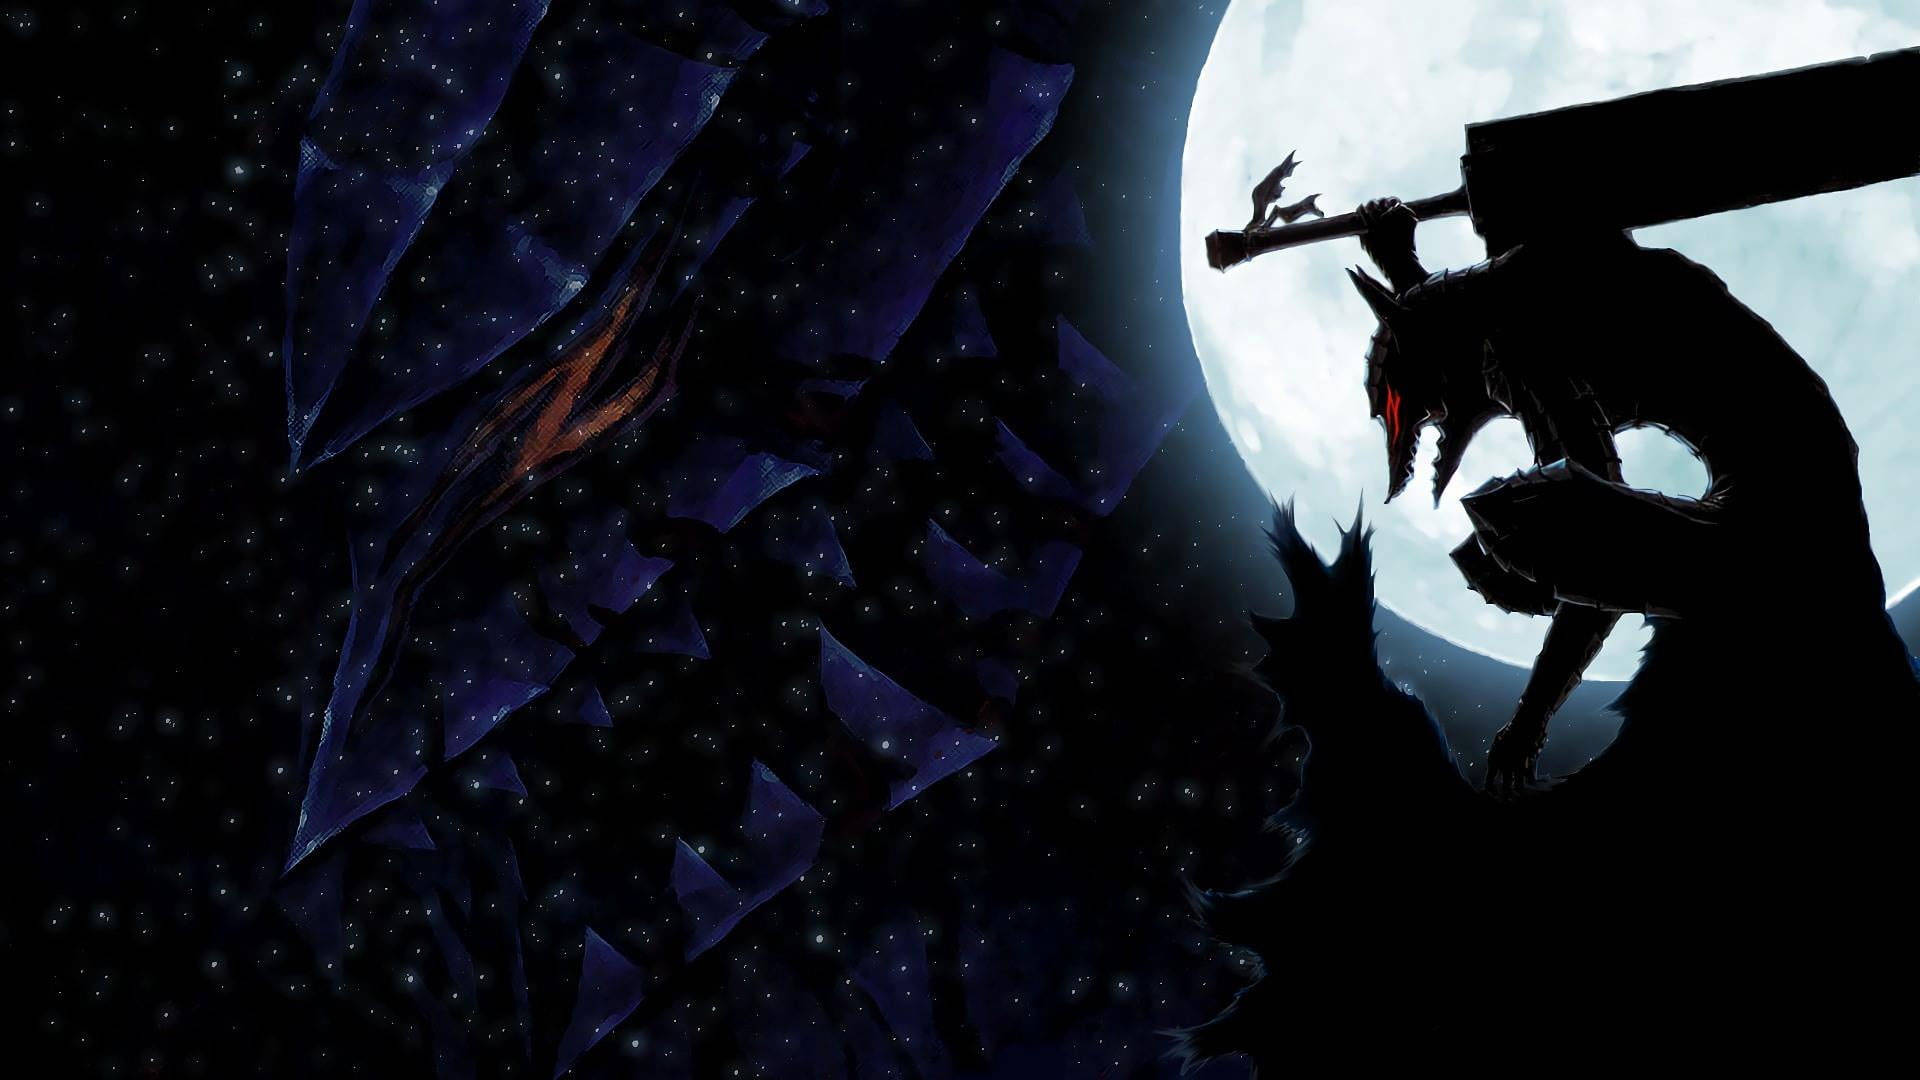 Gutten, hovedpersonen i Anime Berserk, står i baggrunden. Wallpaper